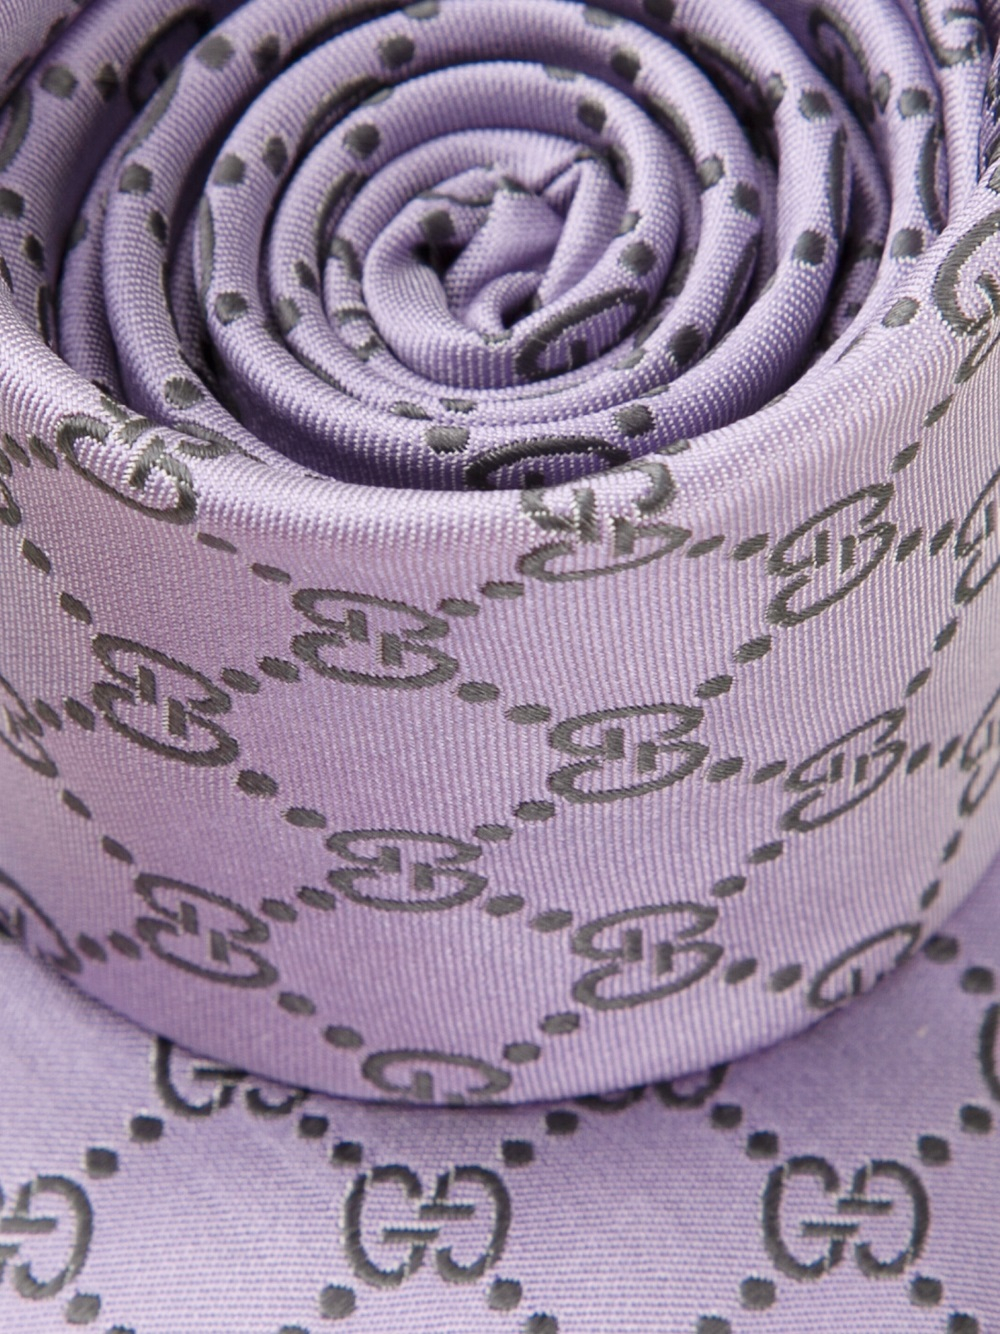 Gucci Monogram Print Tie in Purple for Men